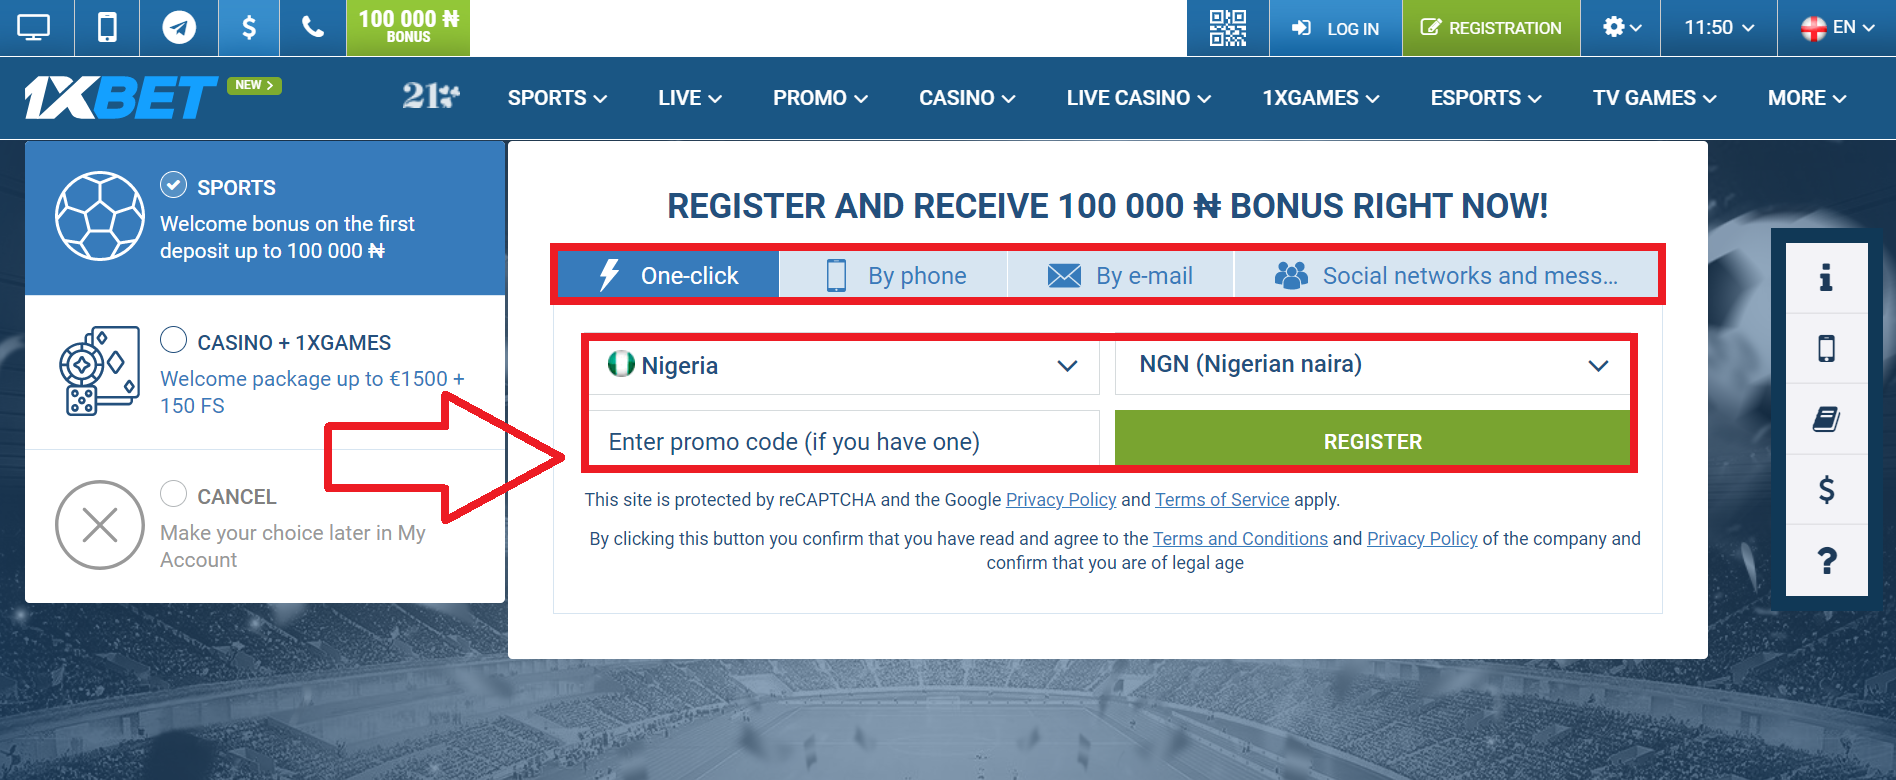 Registration on the 1xBet website in Nigeria